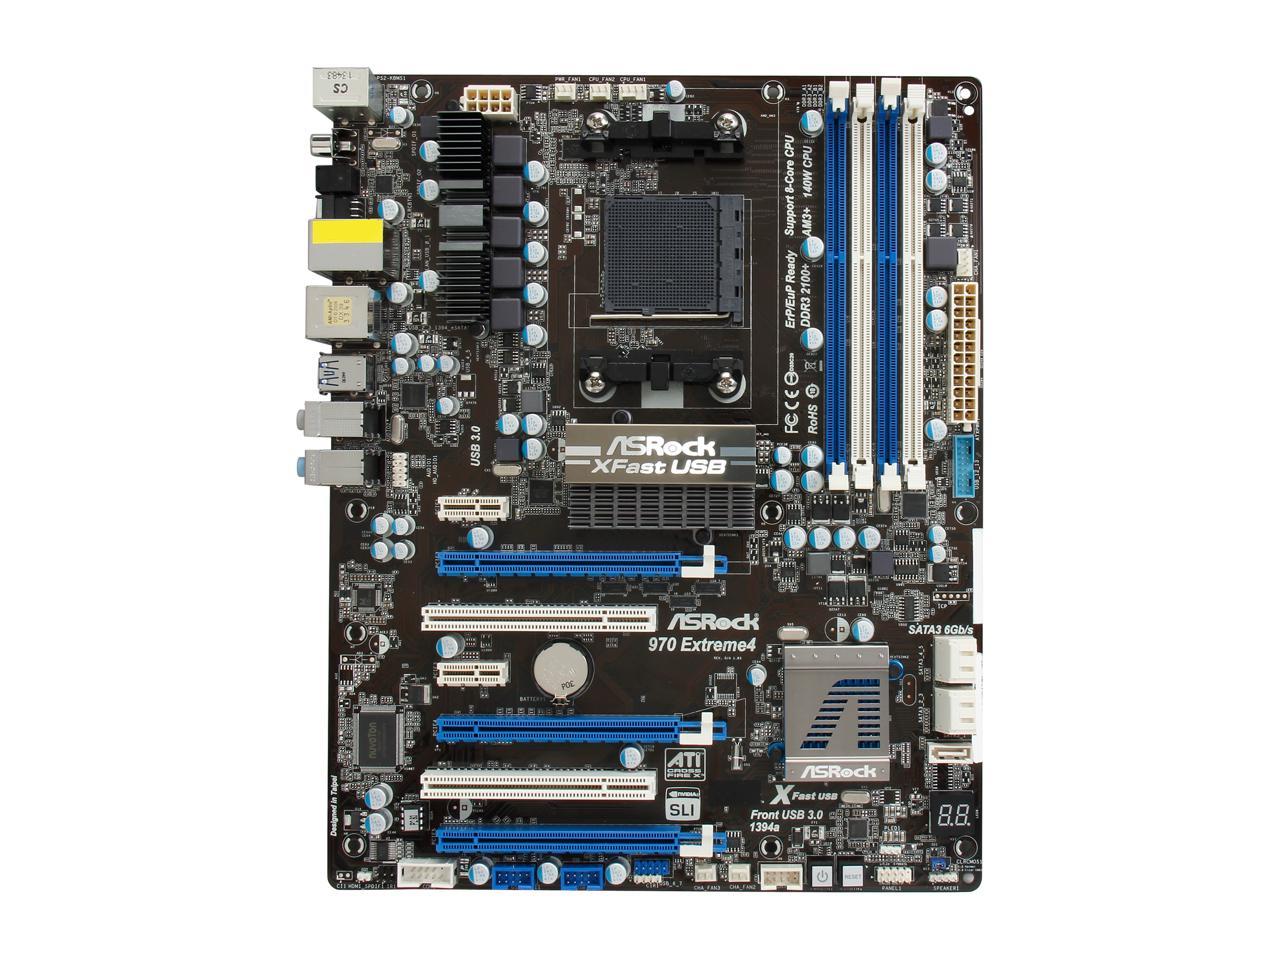 ASRock 970 Extreme4 AM3+/AM3 ATX AMD Motherboard with UEFI BIOS